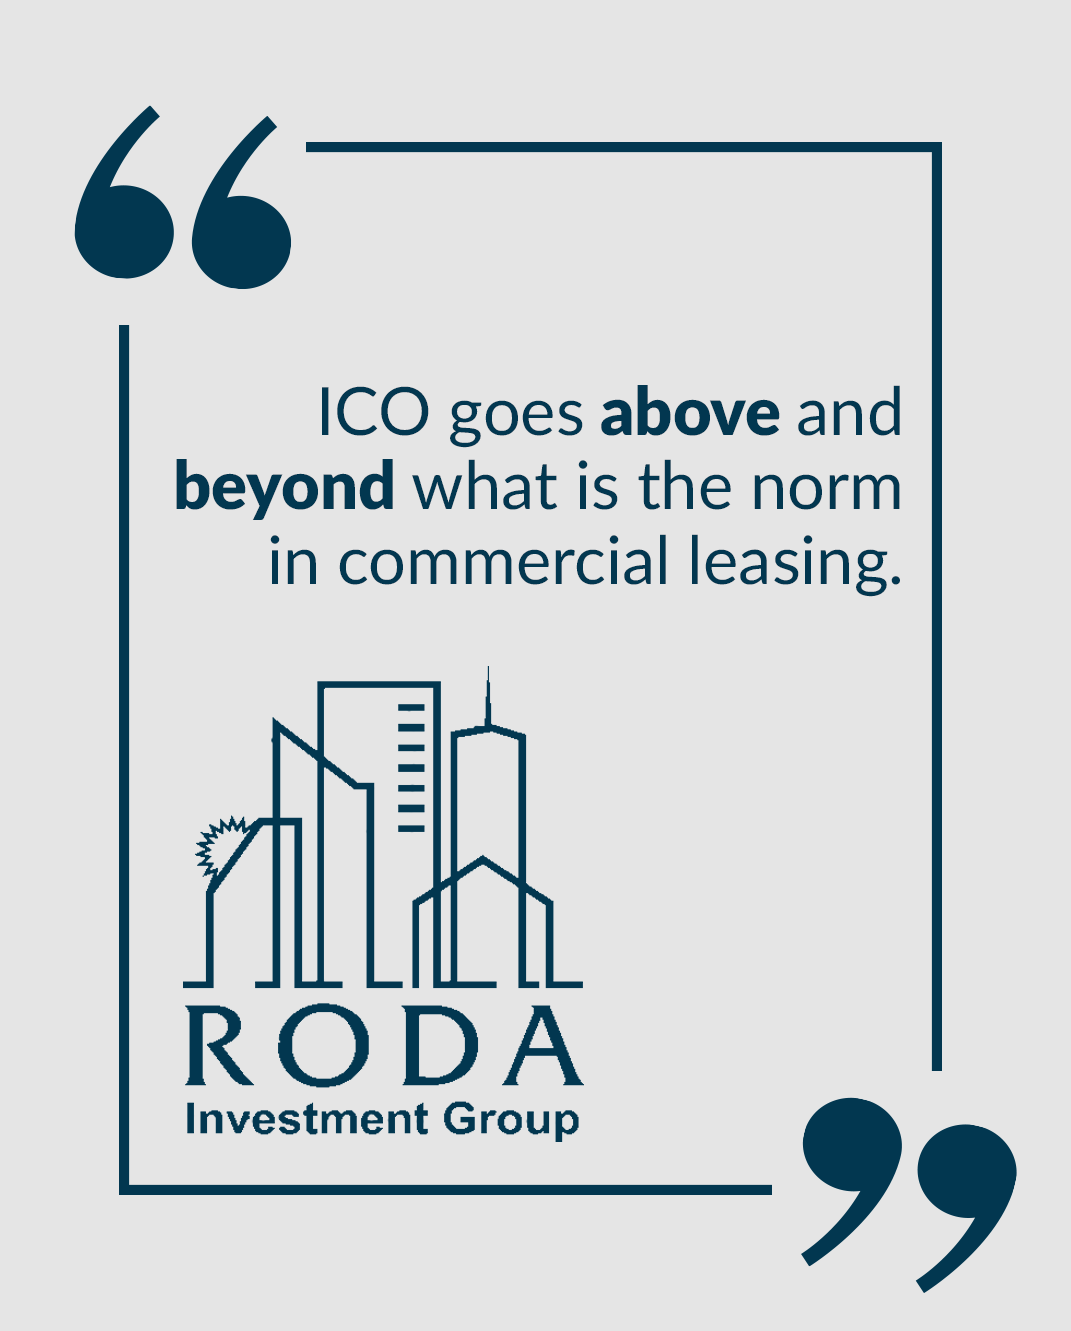 Roda Investment Group